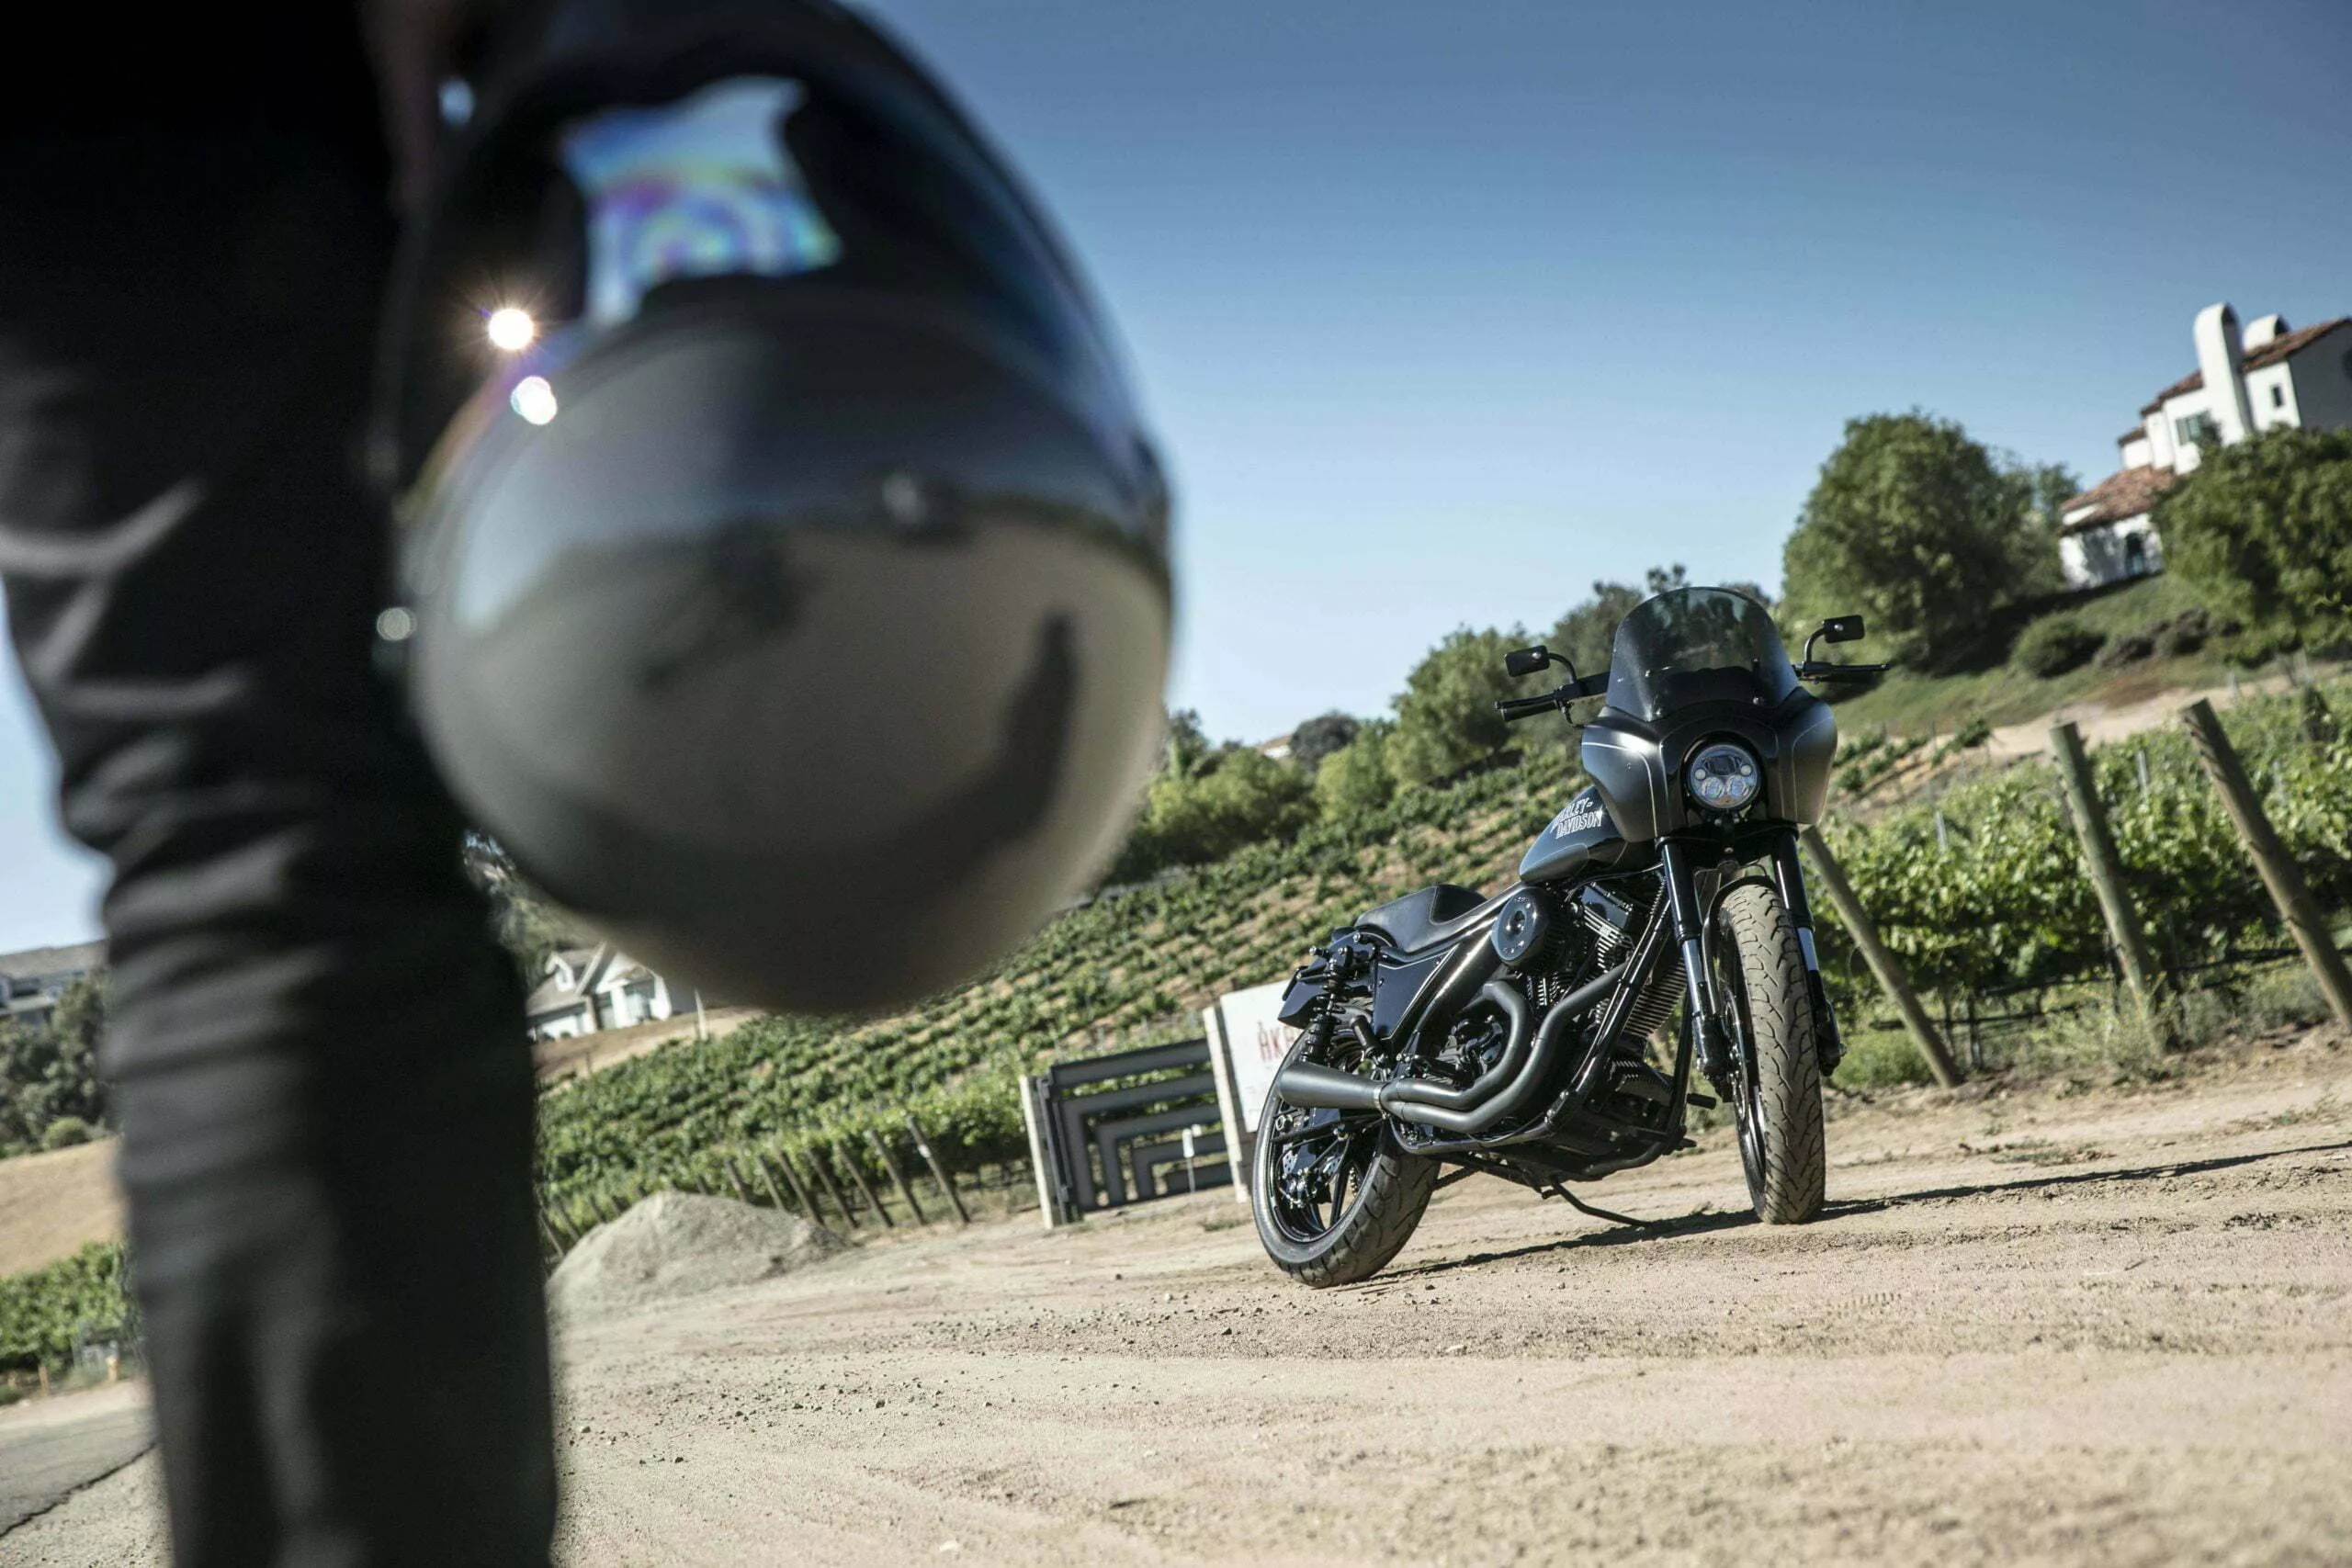 A custom Harley-Davidson FXR motorcycle.